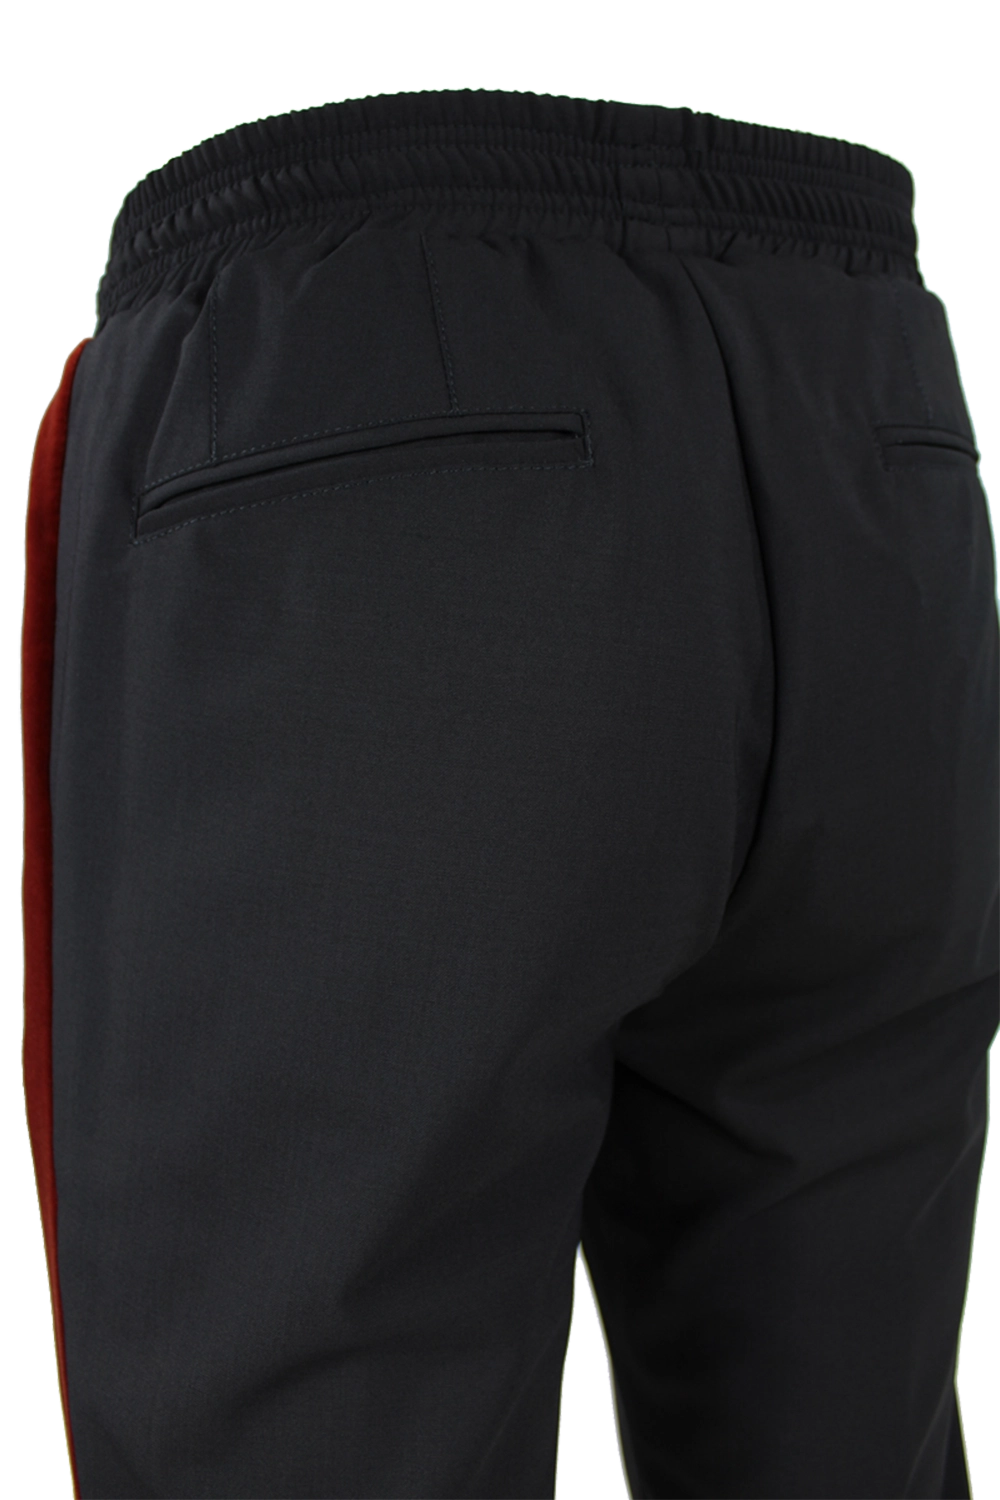 Pantatuta in tela di lana nera con banda laterale tasca